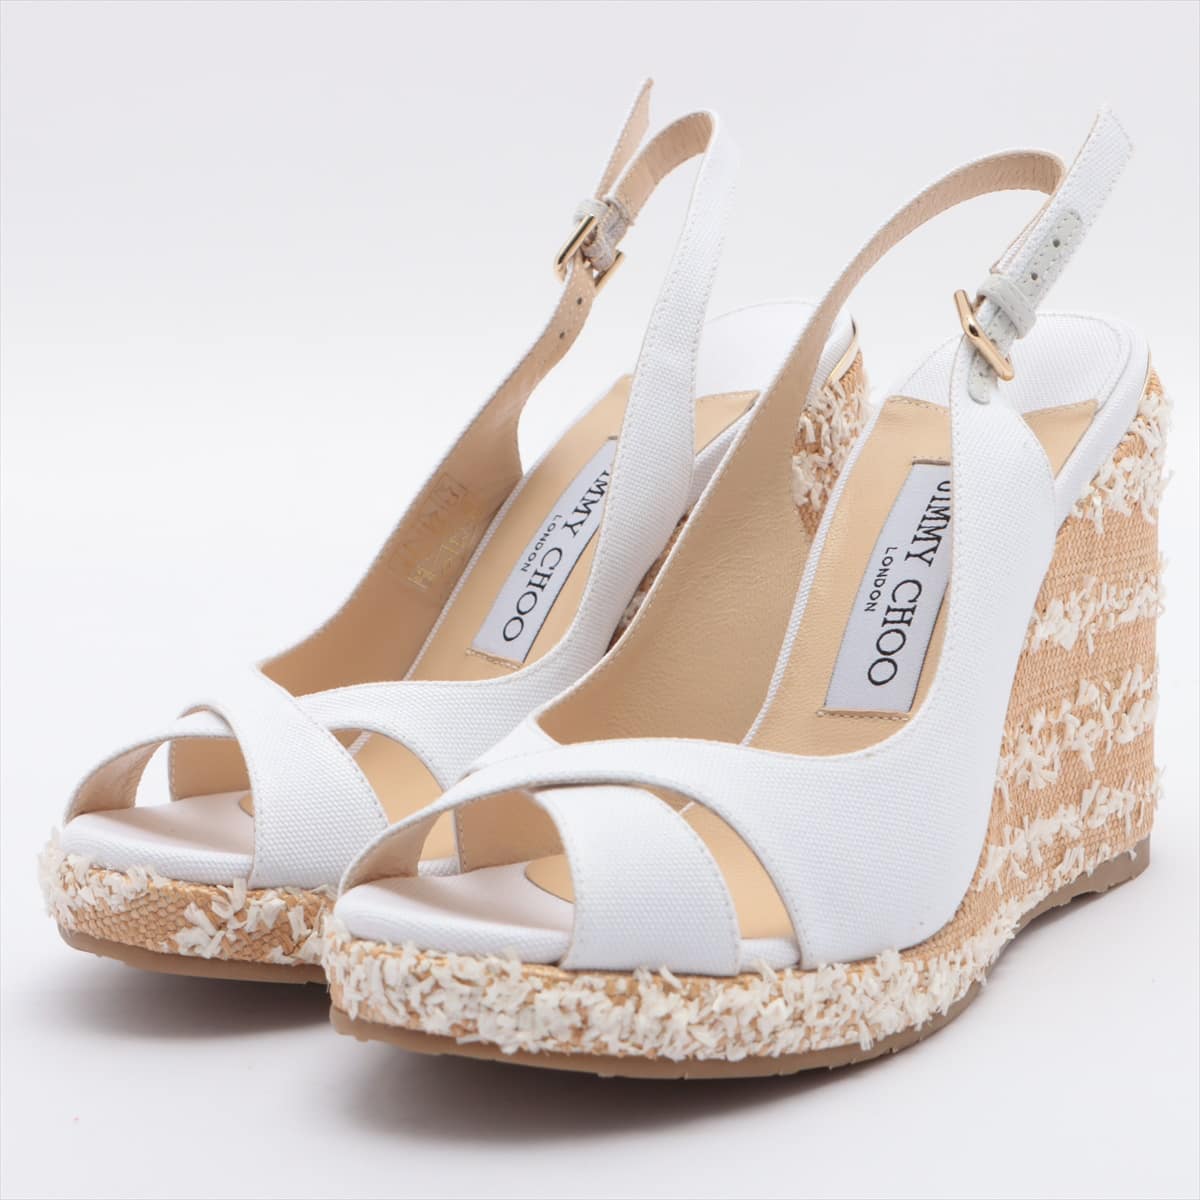 Jimmy Choo Leather Sandals 36 Ladies' White x beige wedge sole